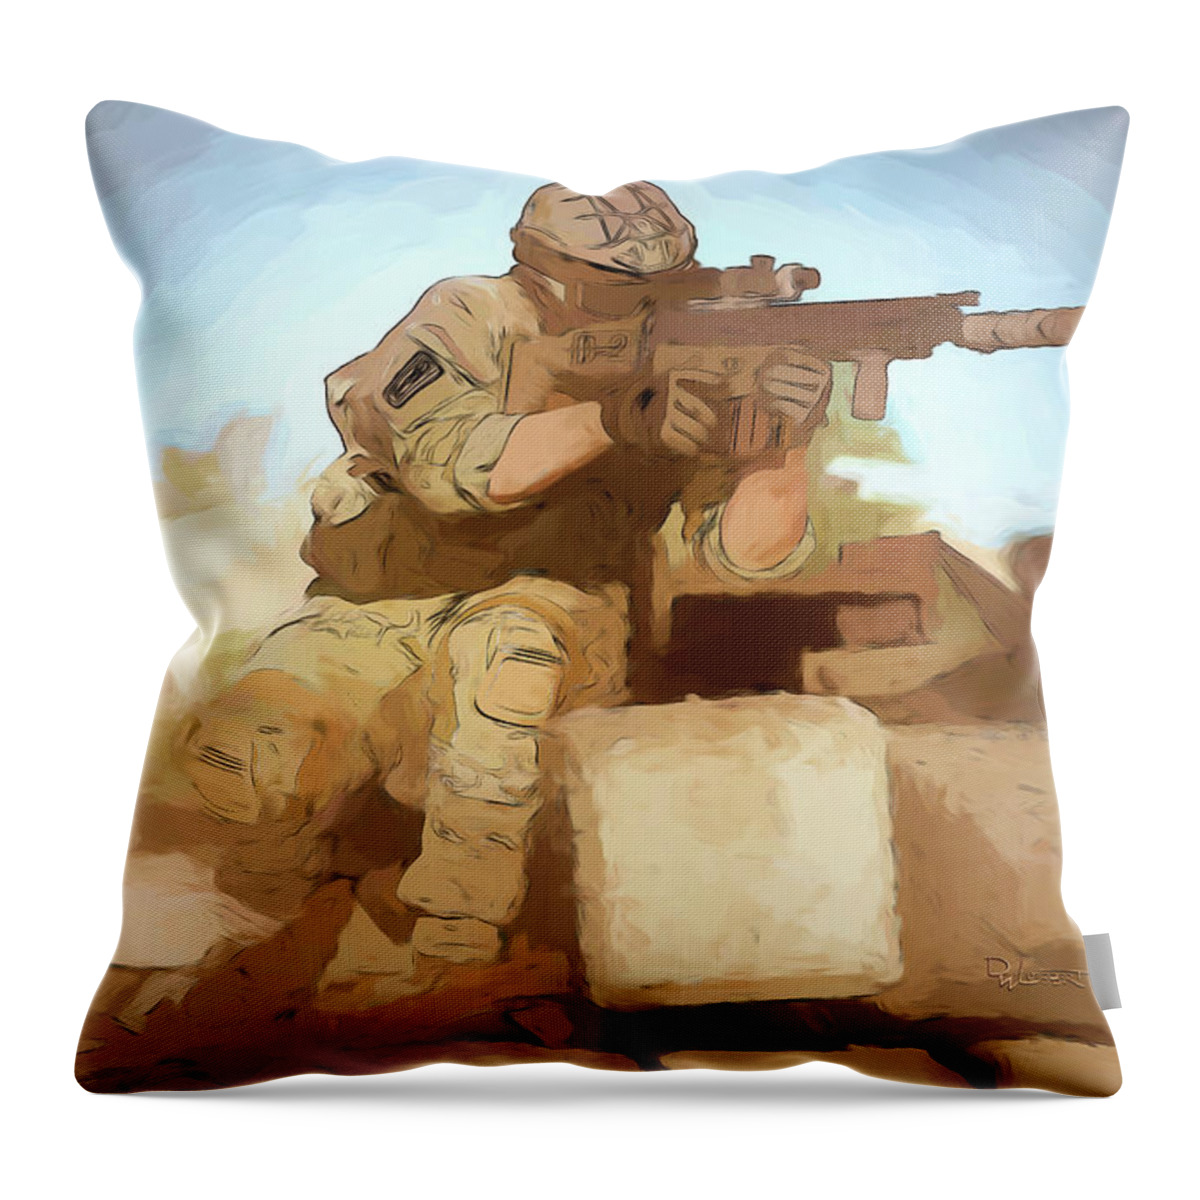 Soldier Throw Pillow featuring the digital art Soldier by David Luebbert